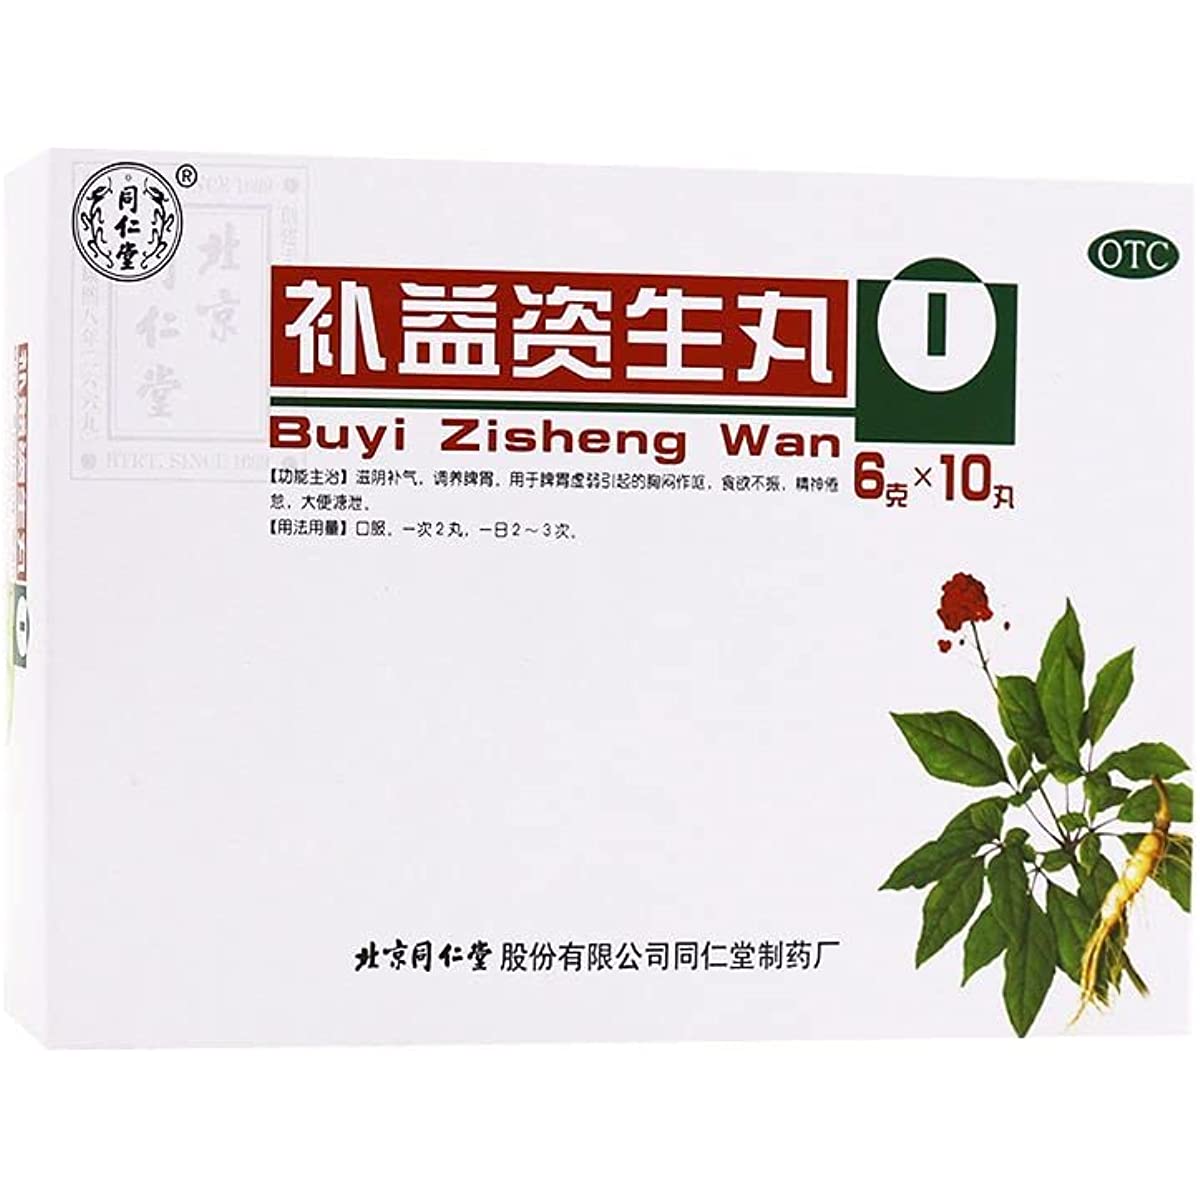 1 Box, Tongrentang Buyi Zisheng Wan 6g*10 Big Pills / Box 同仁堂 补益资生丸